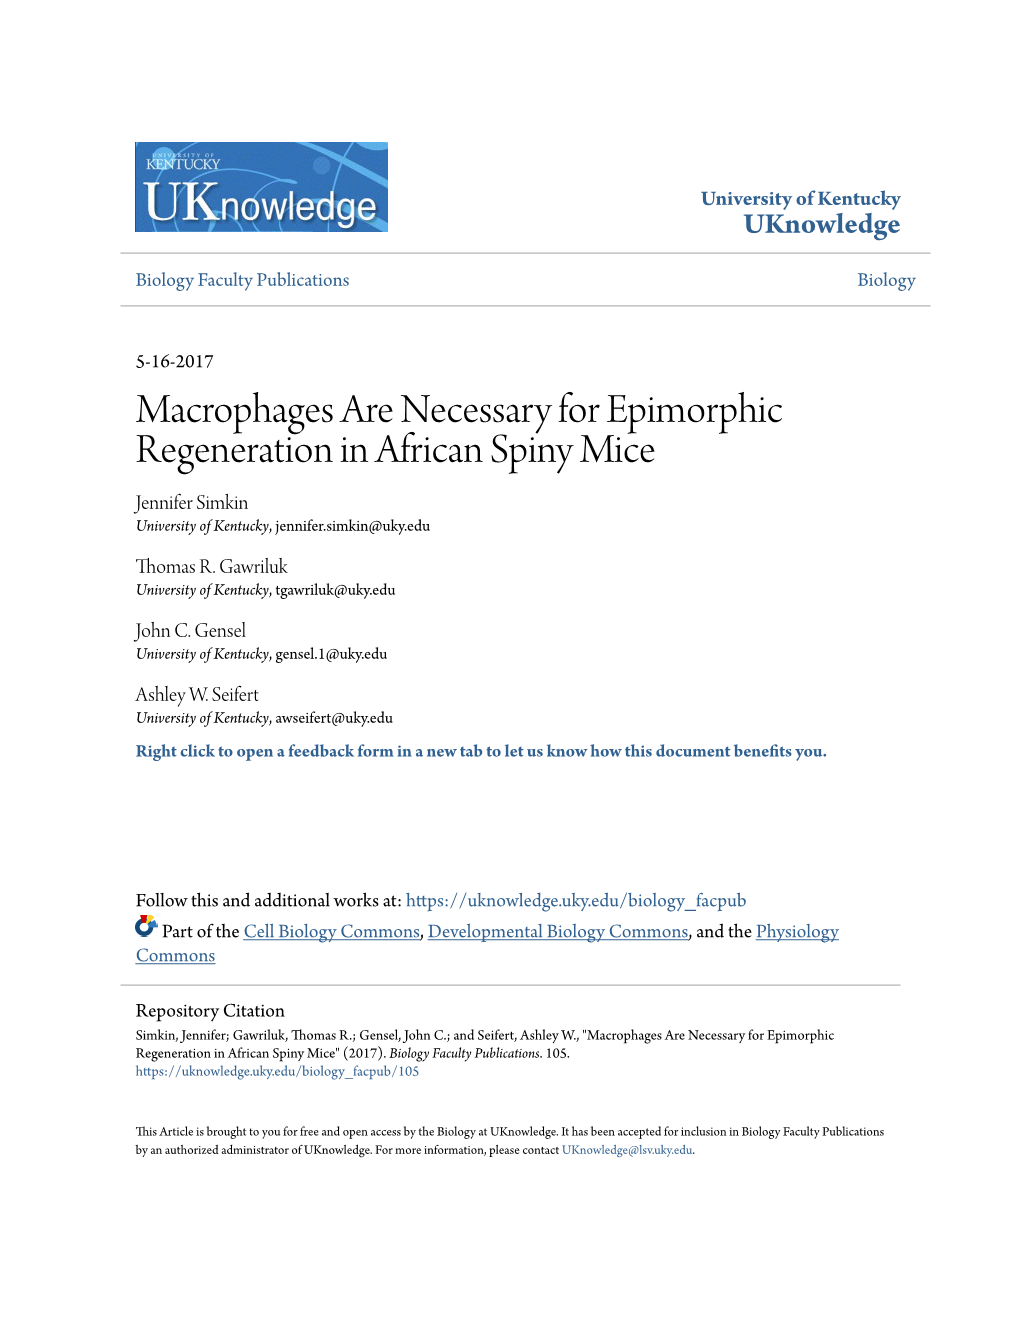 Macrophages Are Necessary for Epimorphic Regeneration in African Spiny Mice Jennifer Simkin University of Kentucky, Jennifer.Simkin@Uky.Edu